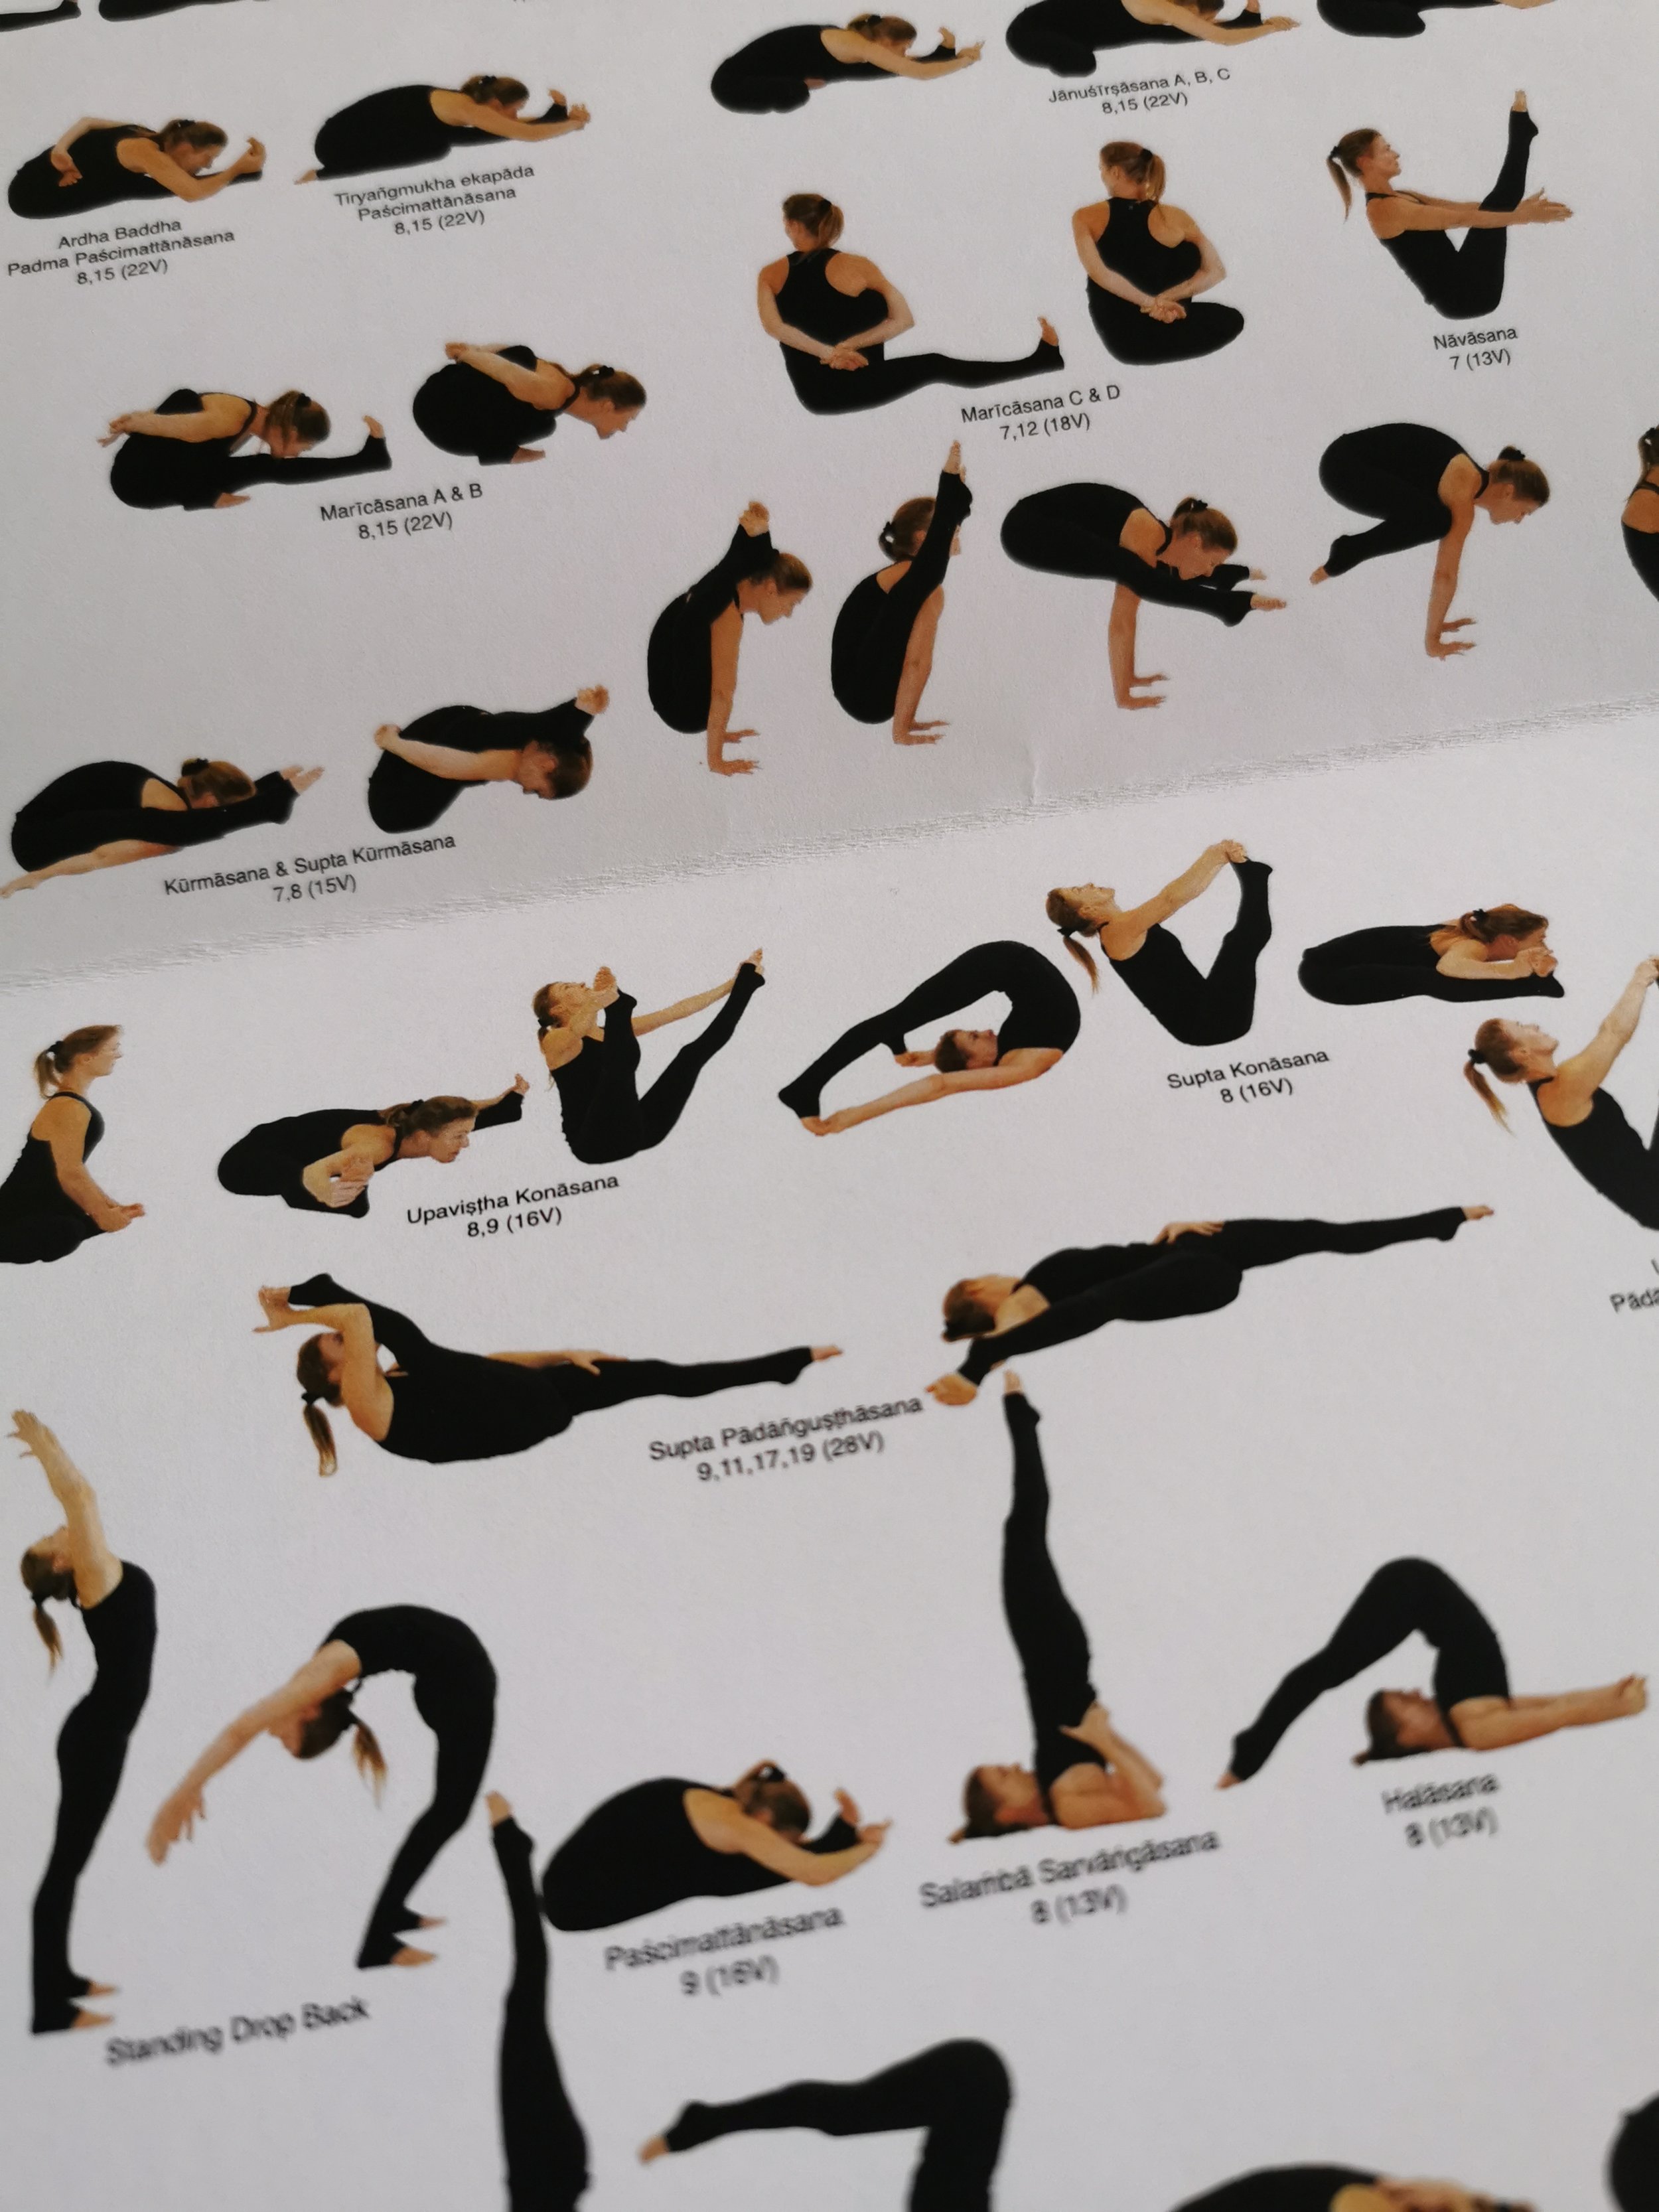 Just Love Yoga - Ashtanga Vinyasa Yoga Classes in Woking